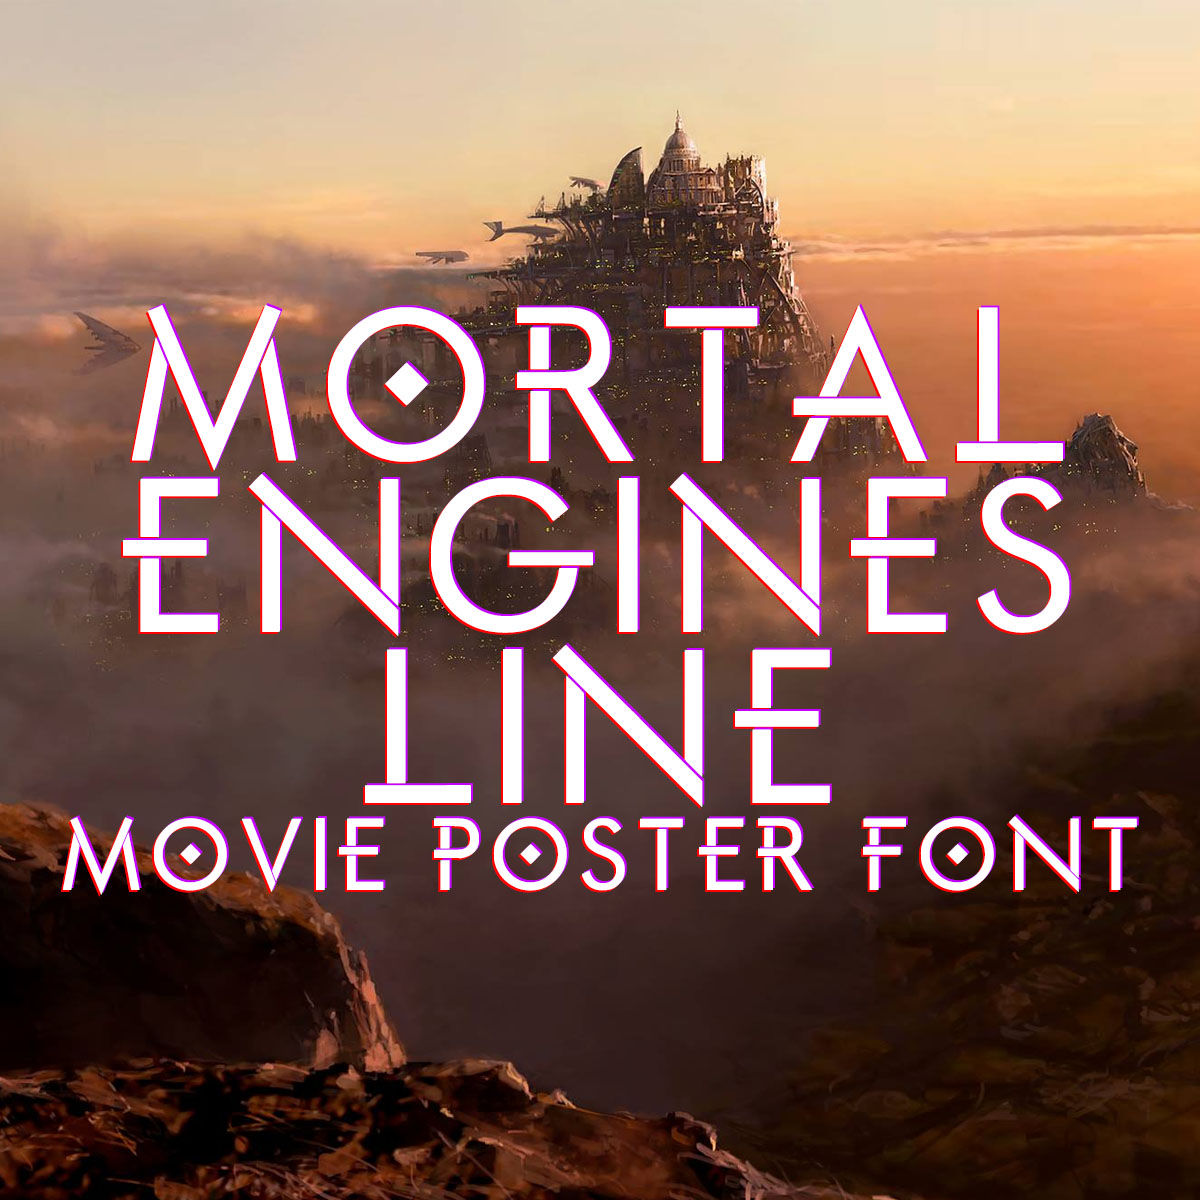 Mortal Engines Line